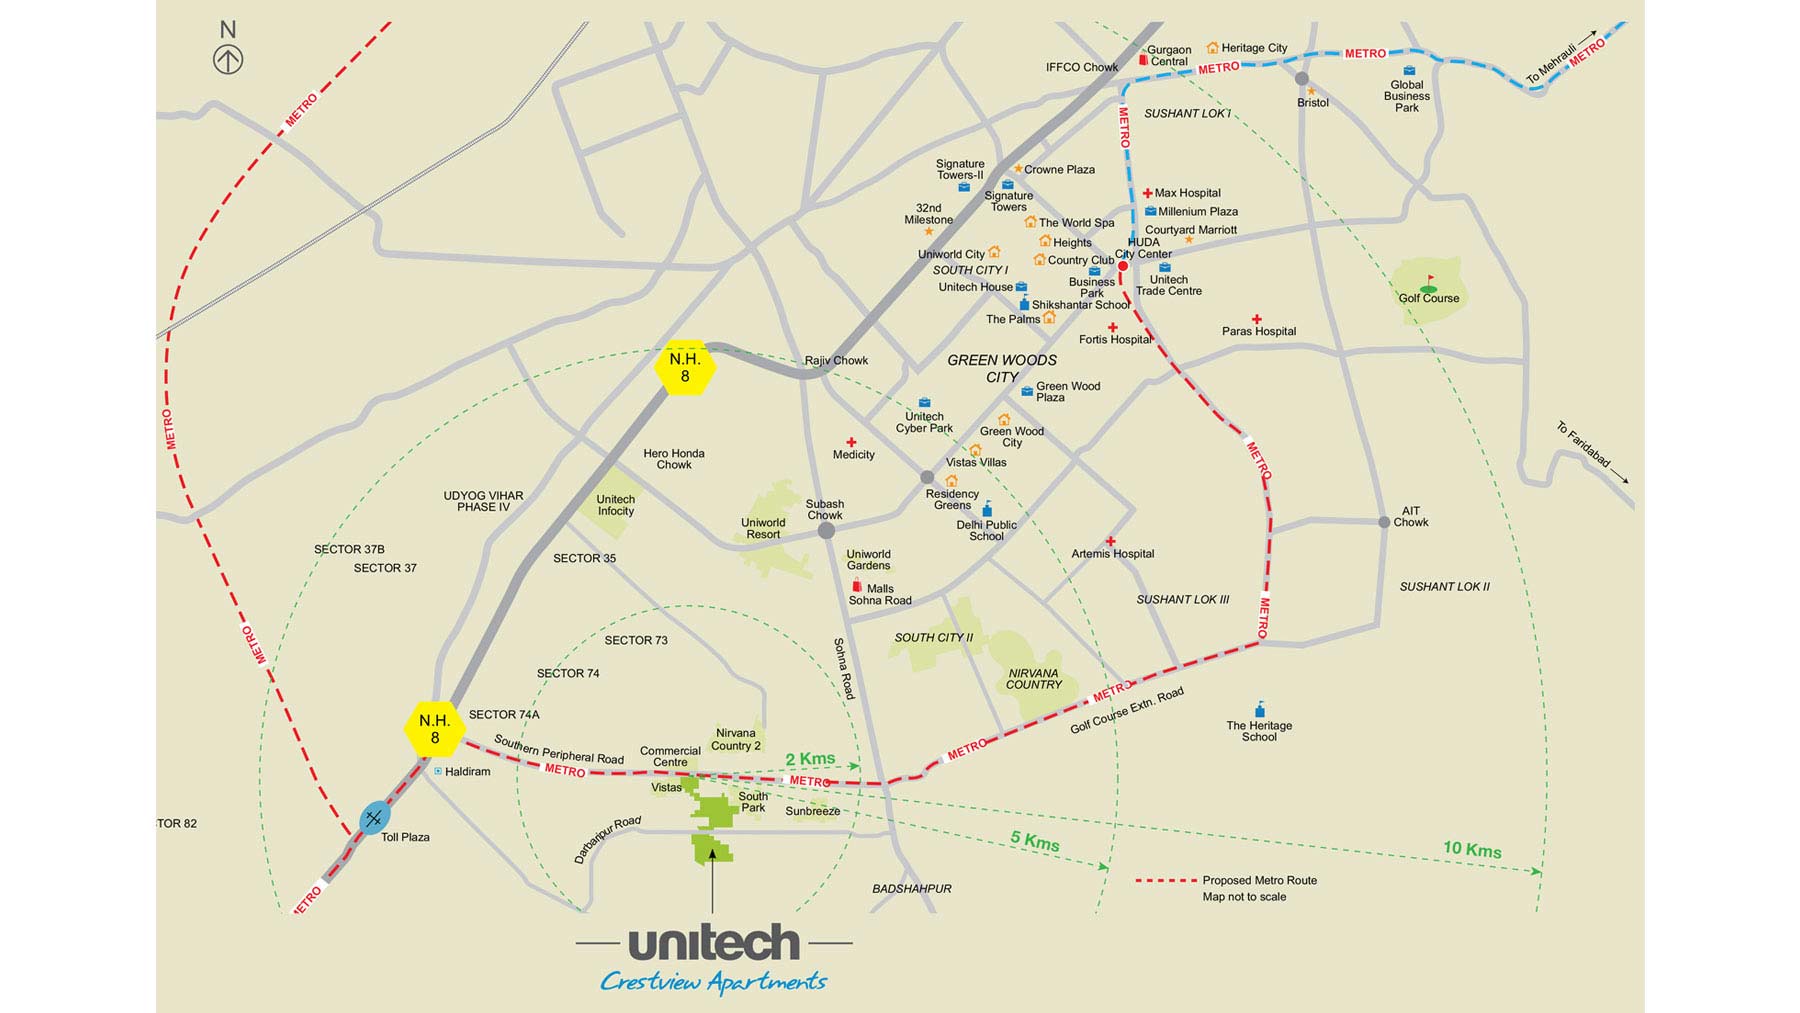 Unitech Crestview Apartments Location Map